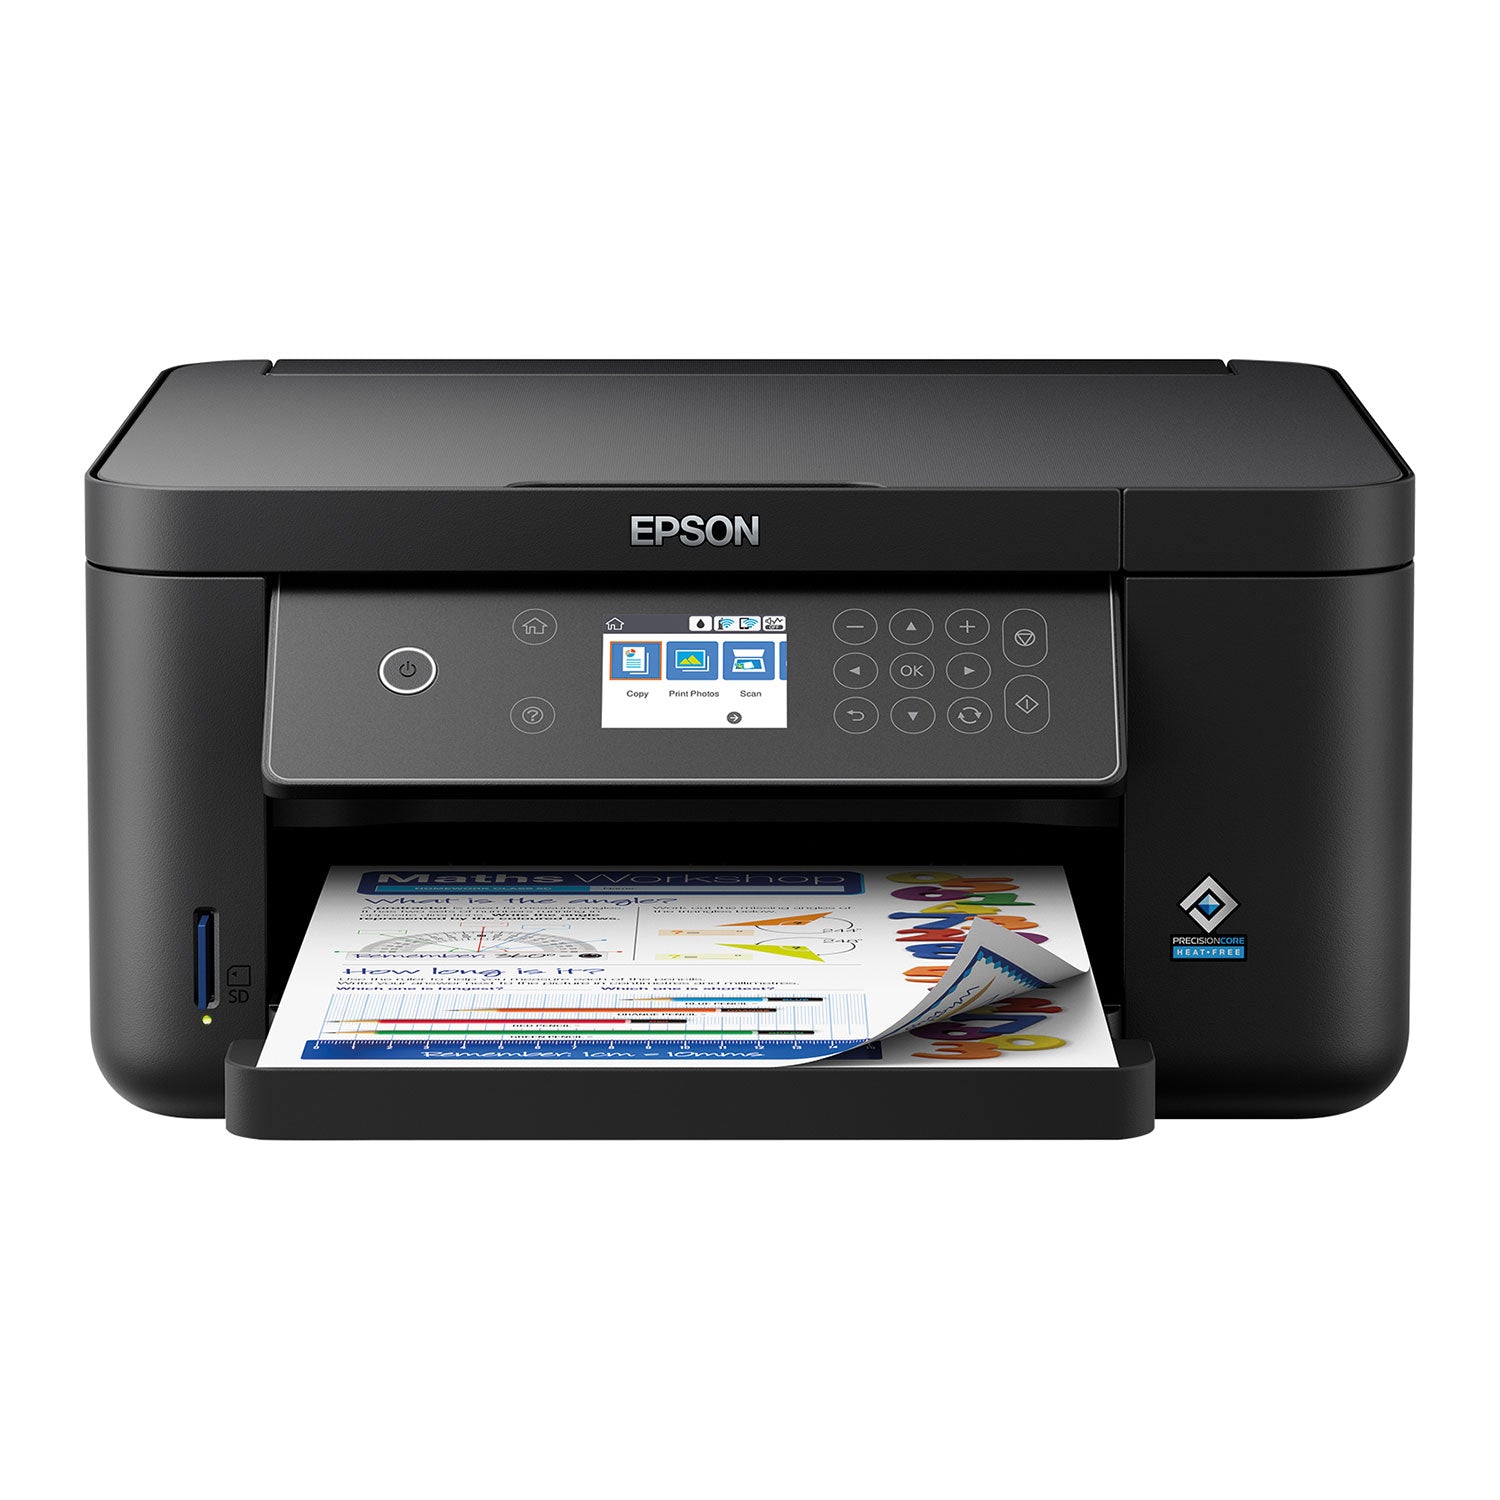 Epson Expression Inkjet AIO Printer with Wi-Fi